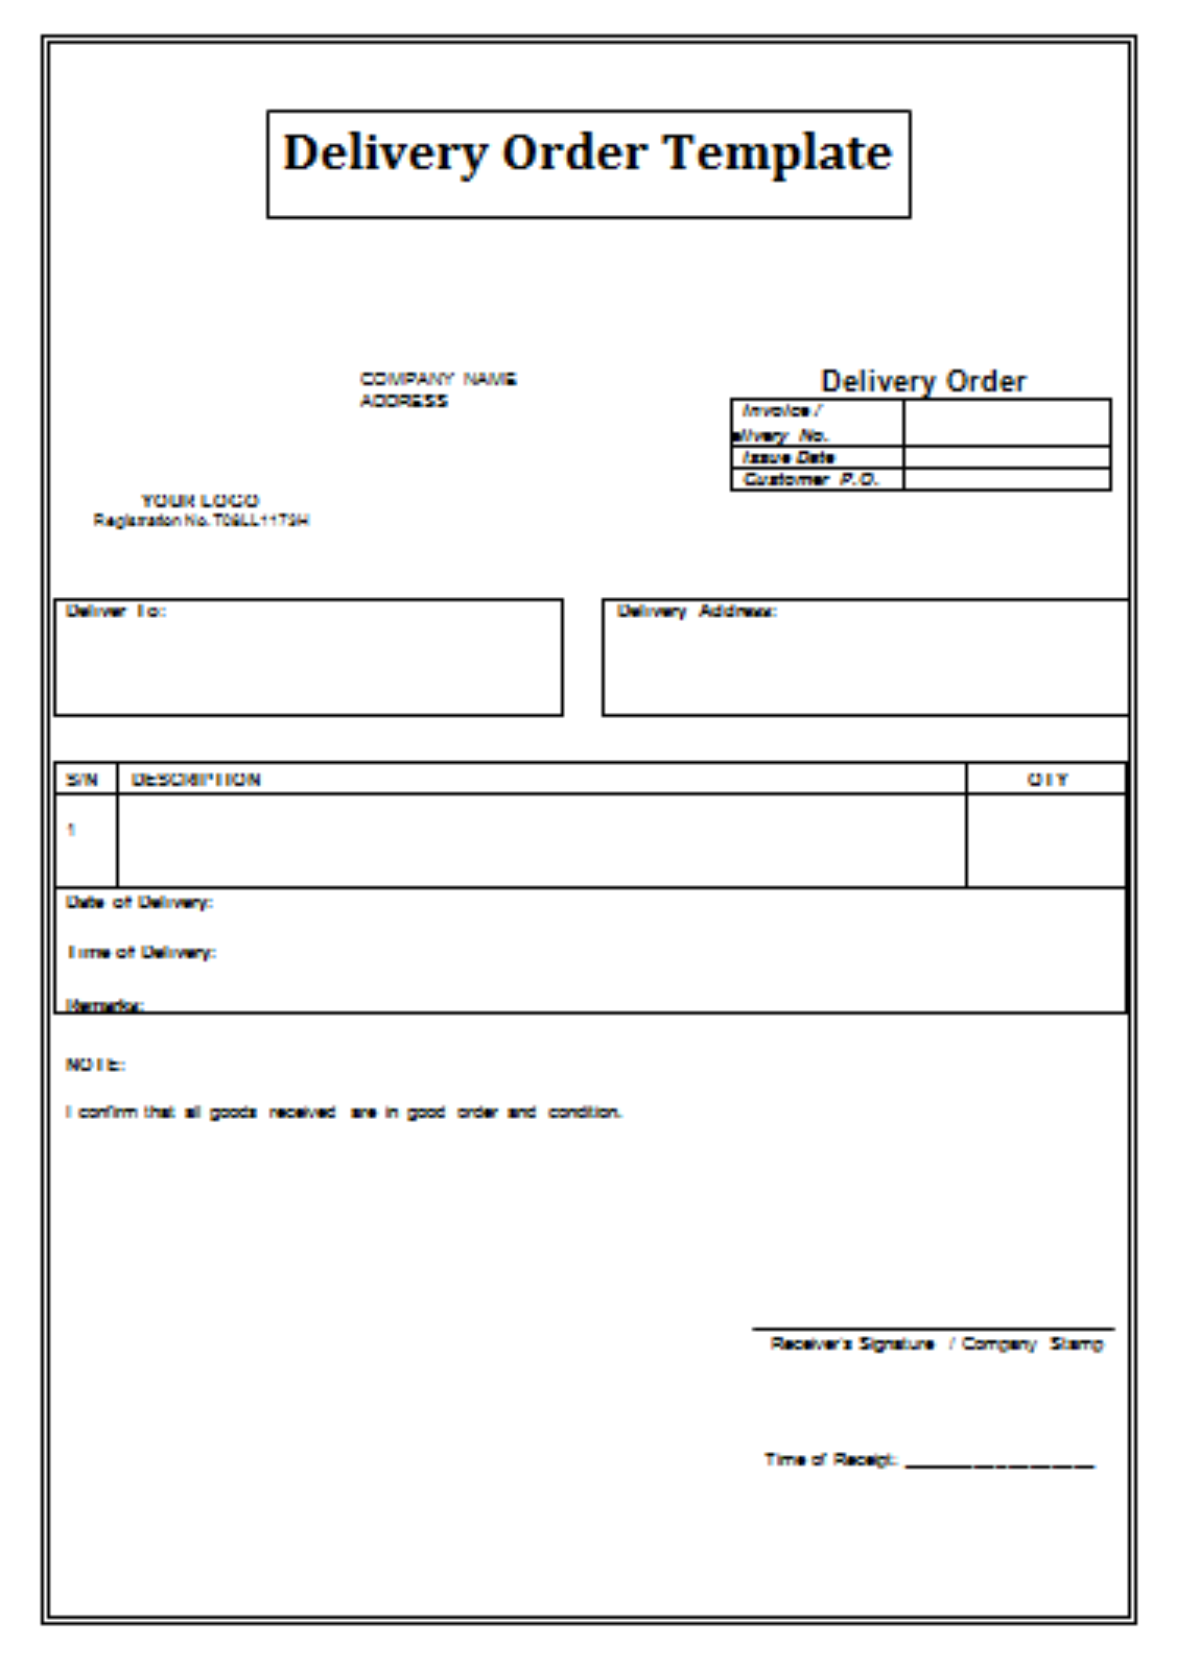 Order pdf. Деливери ордер. Деливери-ордер образец. Delivery Note form excel. Manual Template form.